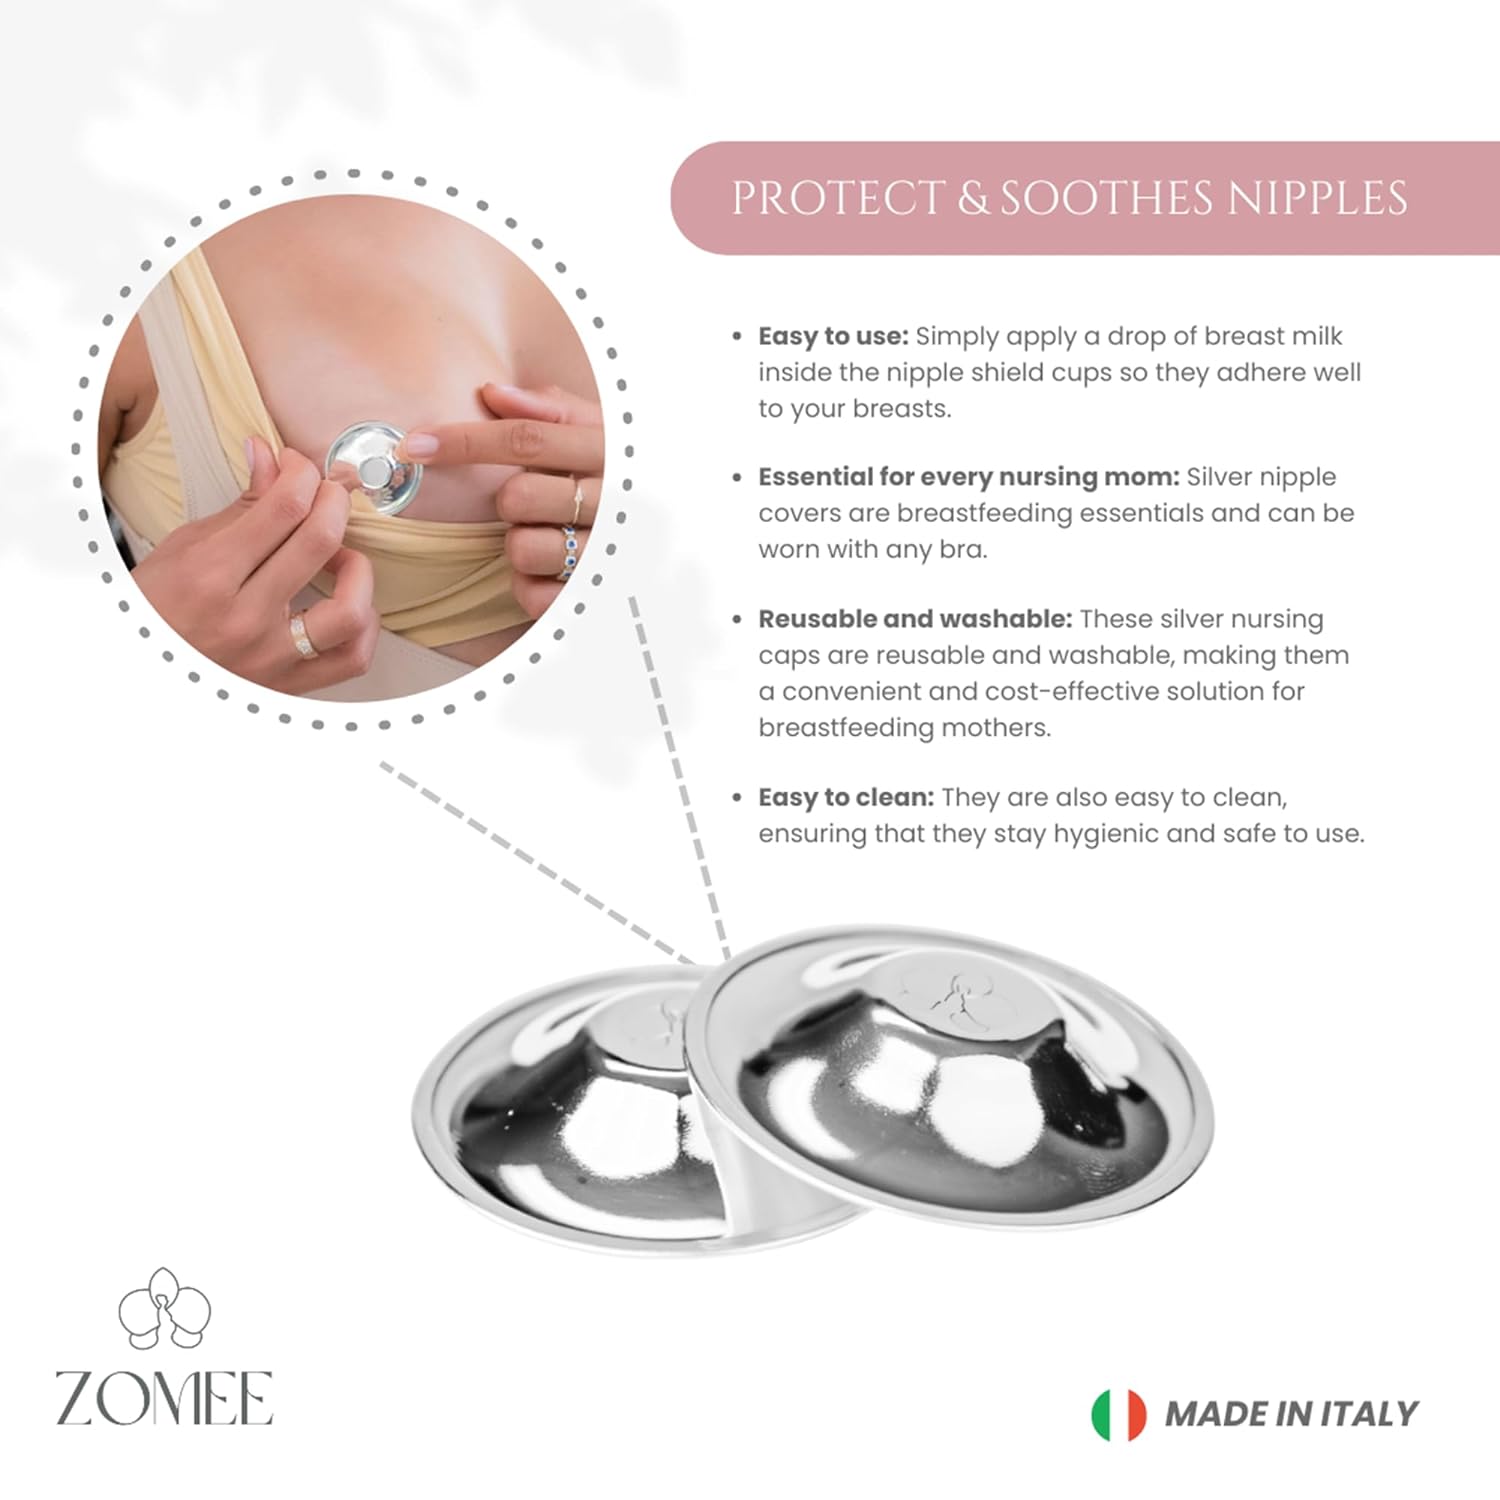 Zomee Original Silver Nursing Cups - Nipple Shields for Nursing Newborn - Zomee Breast Pumps